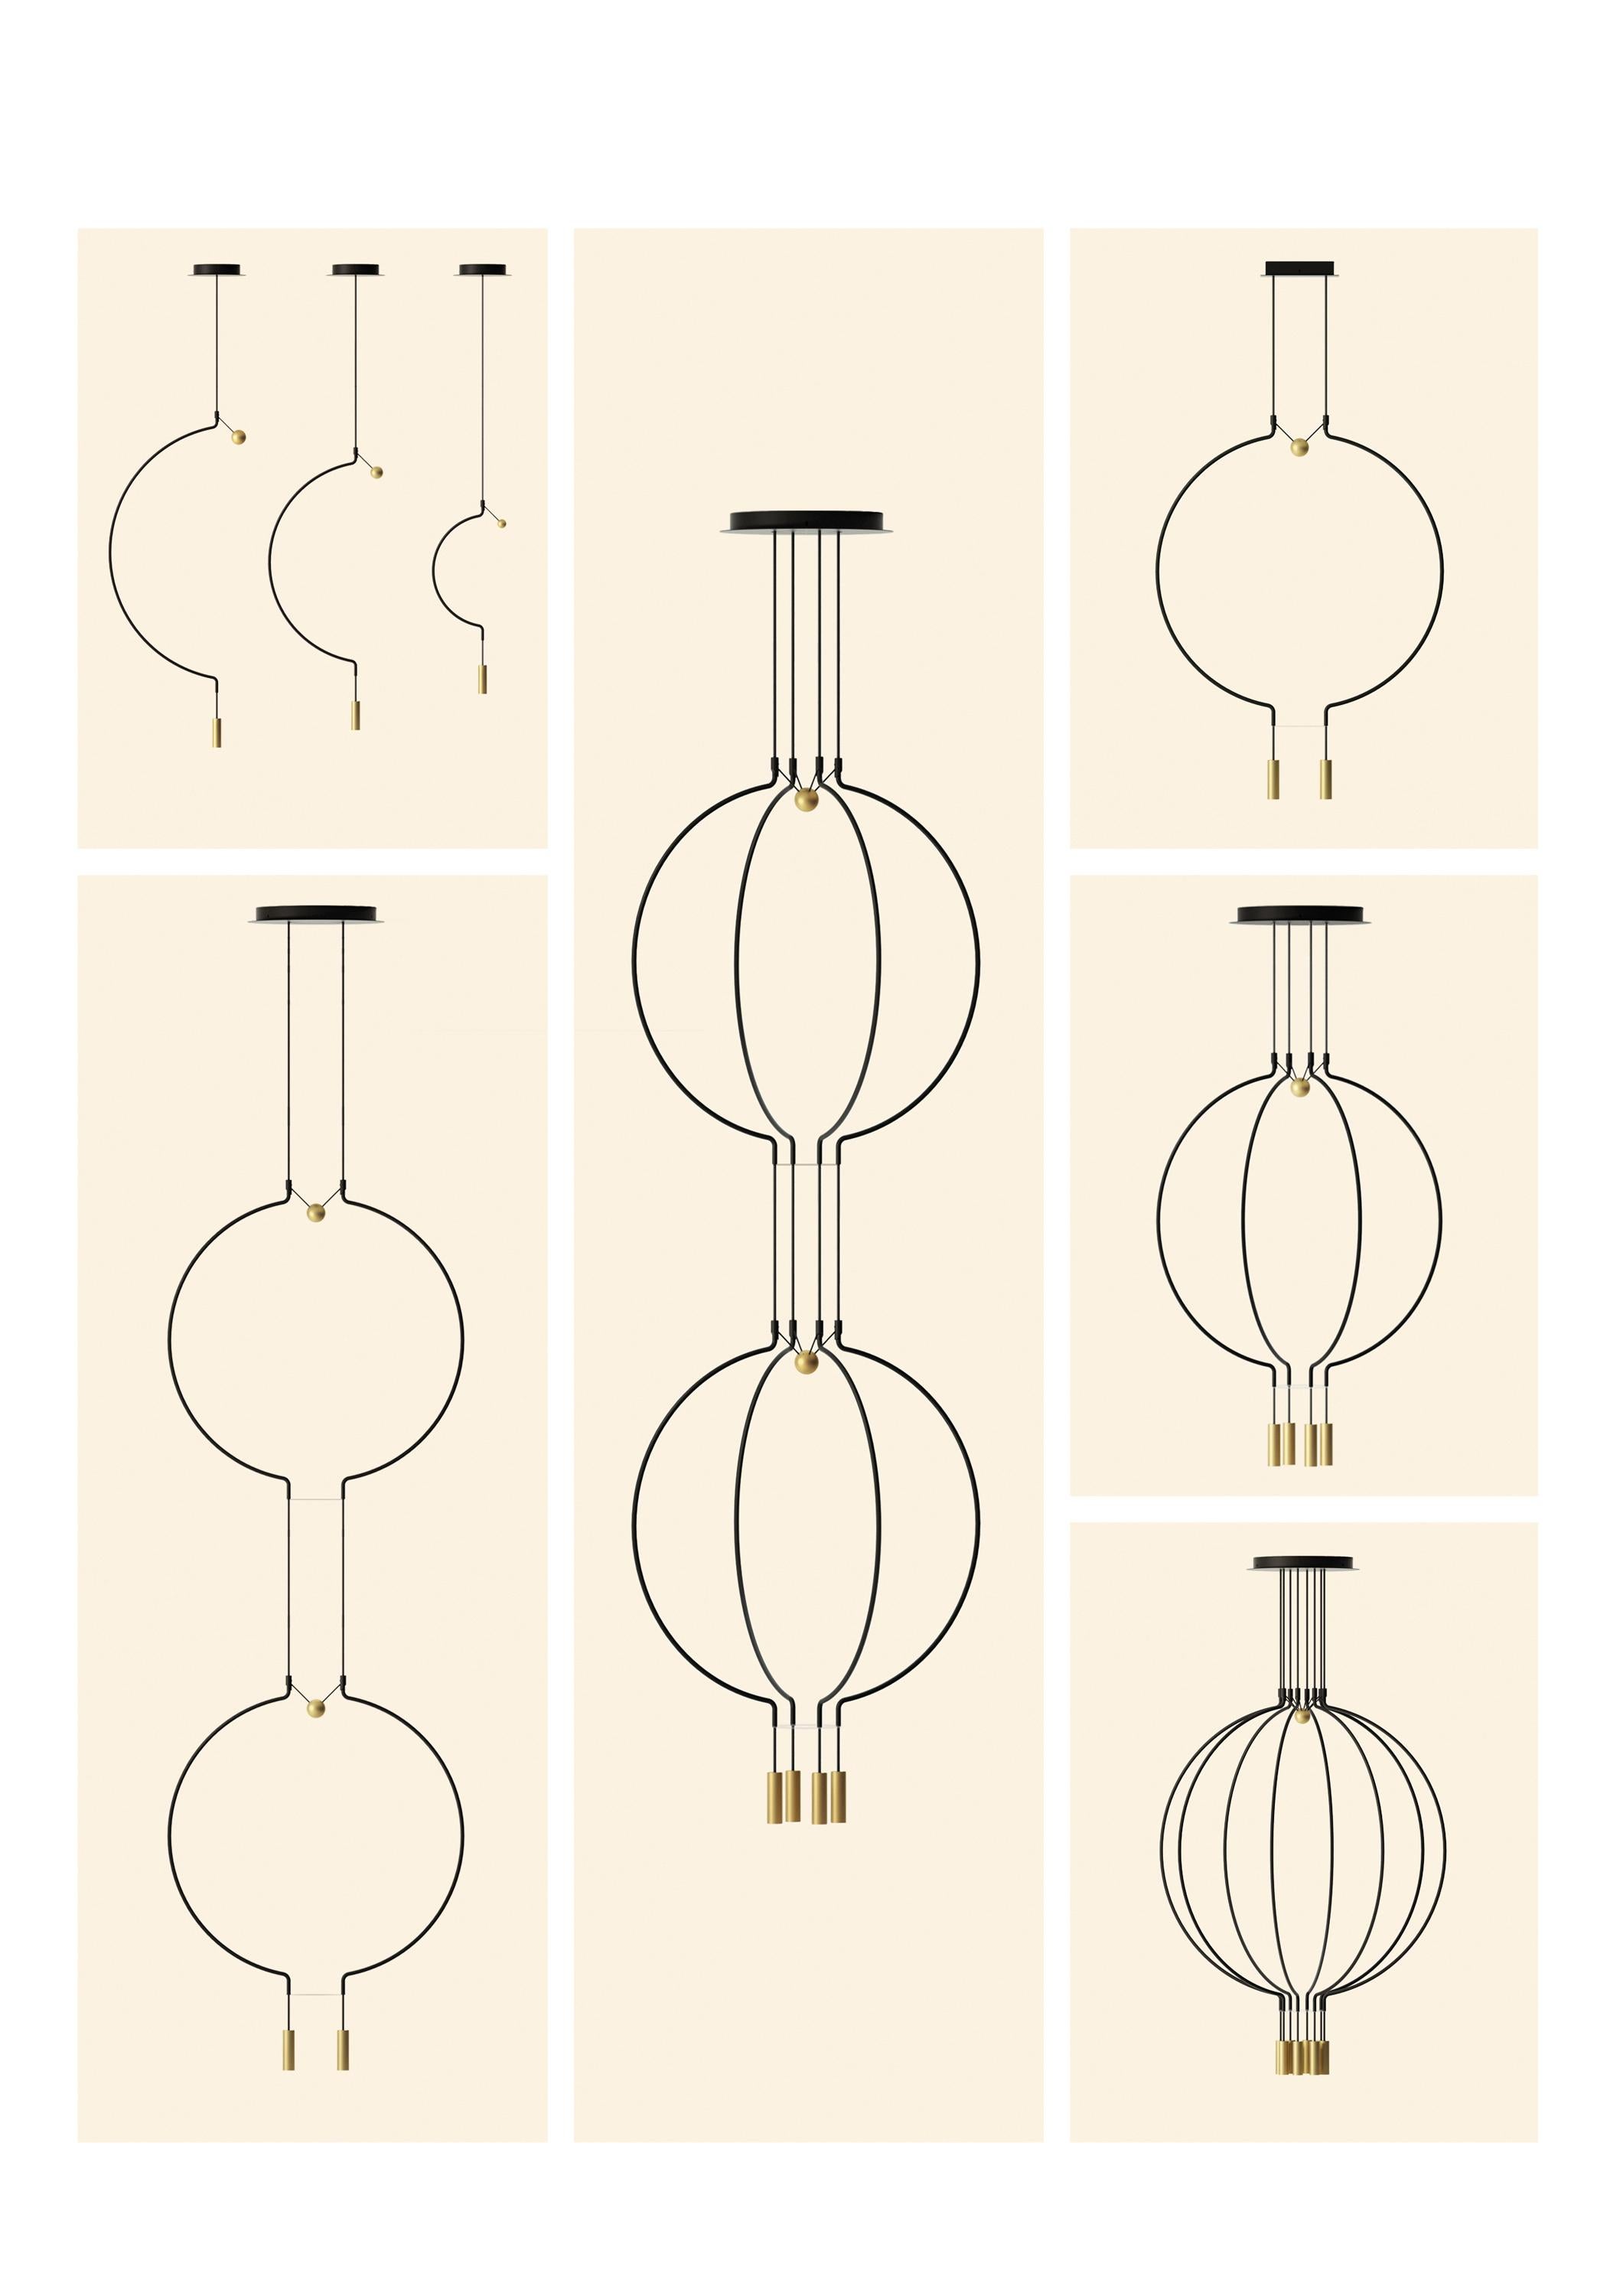 Axolight Liaison Model M1 Pendant Lamp in Gold/Black by Sara Moroni For Sale 3